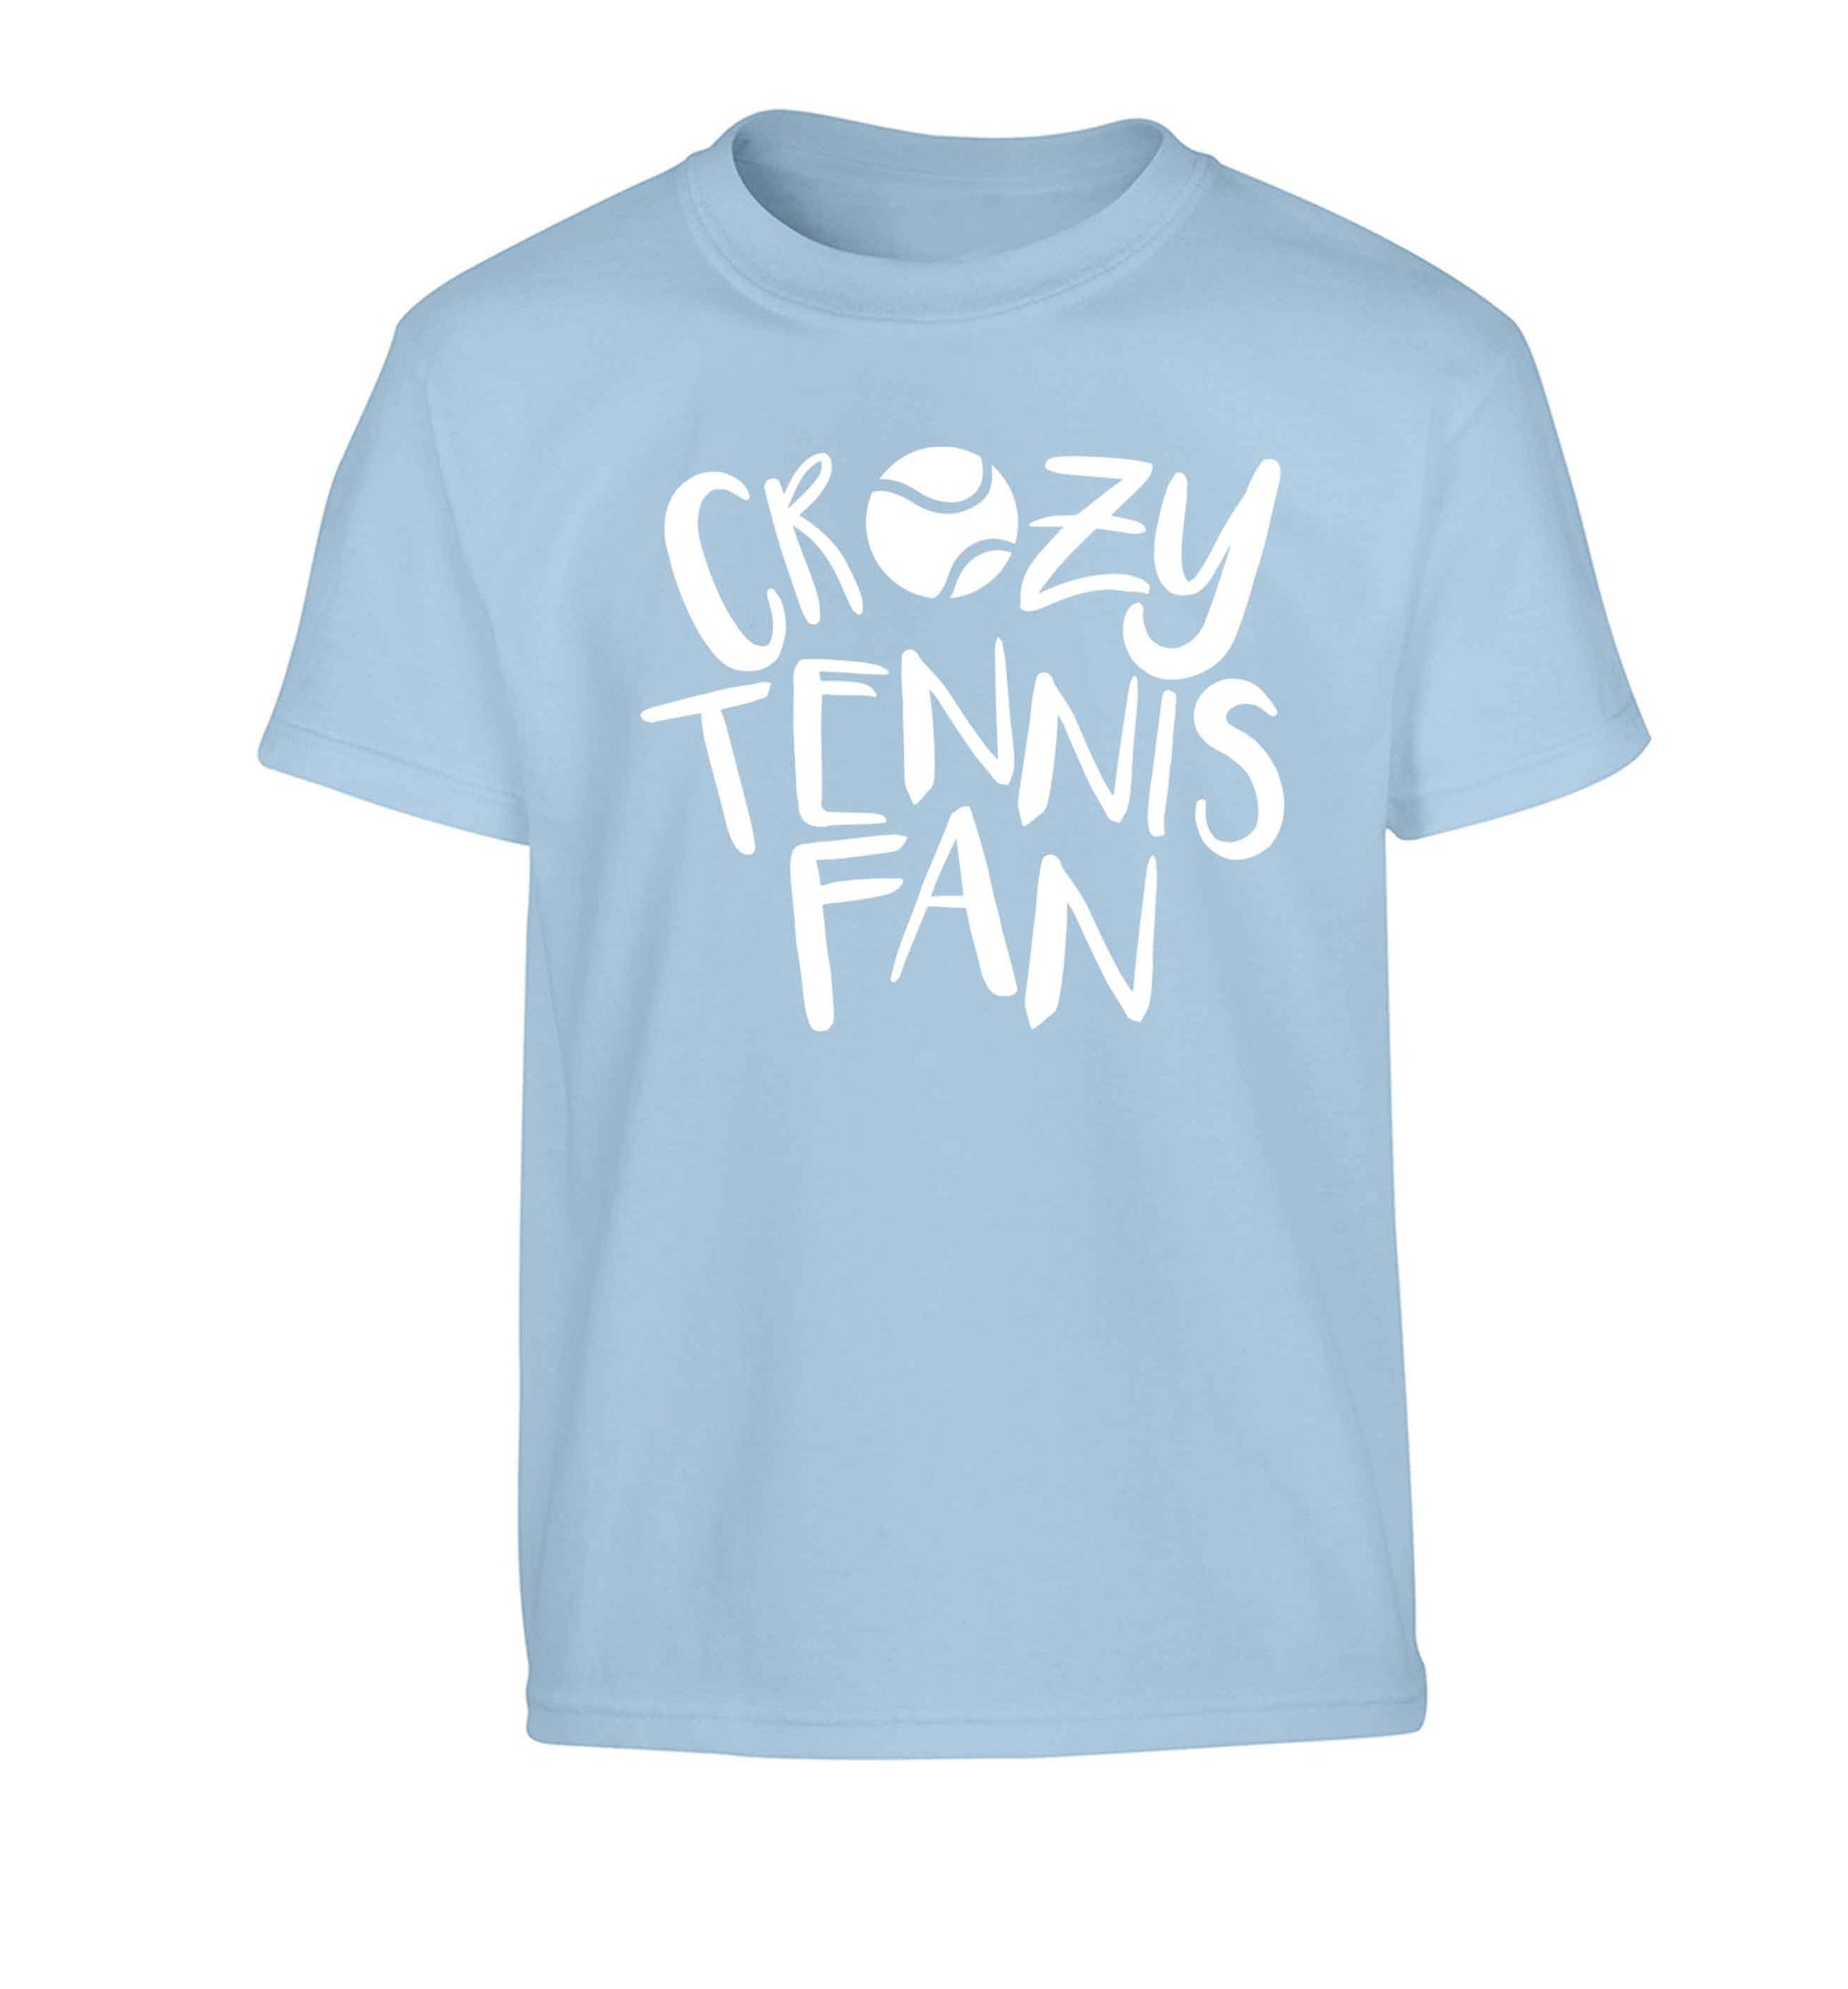 Crazy tennis fan Children's light blue Tshirt 12-13 Years